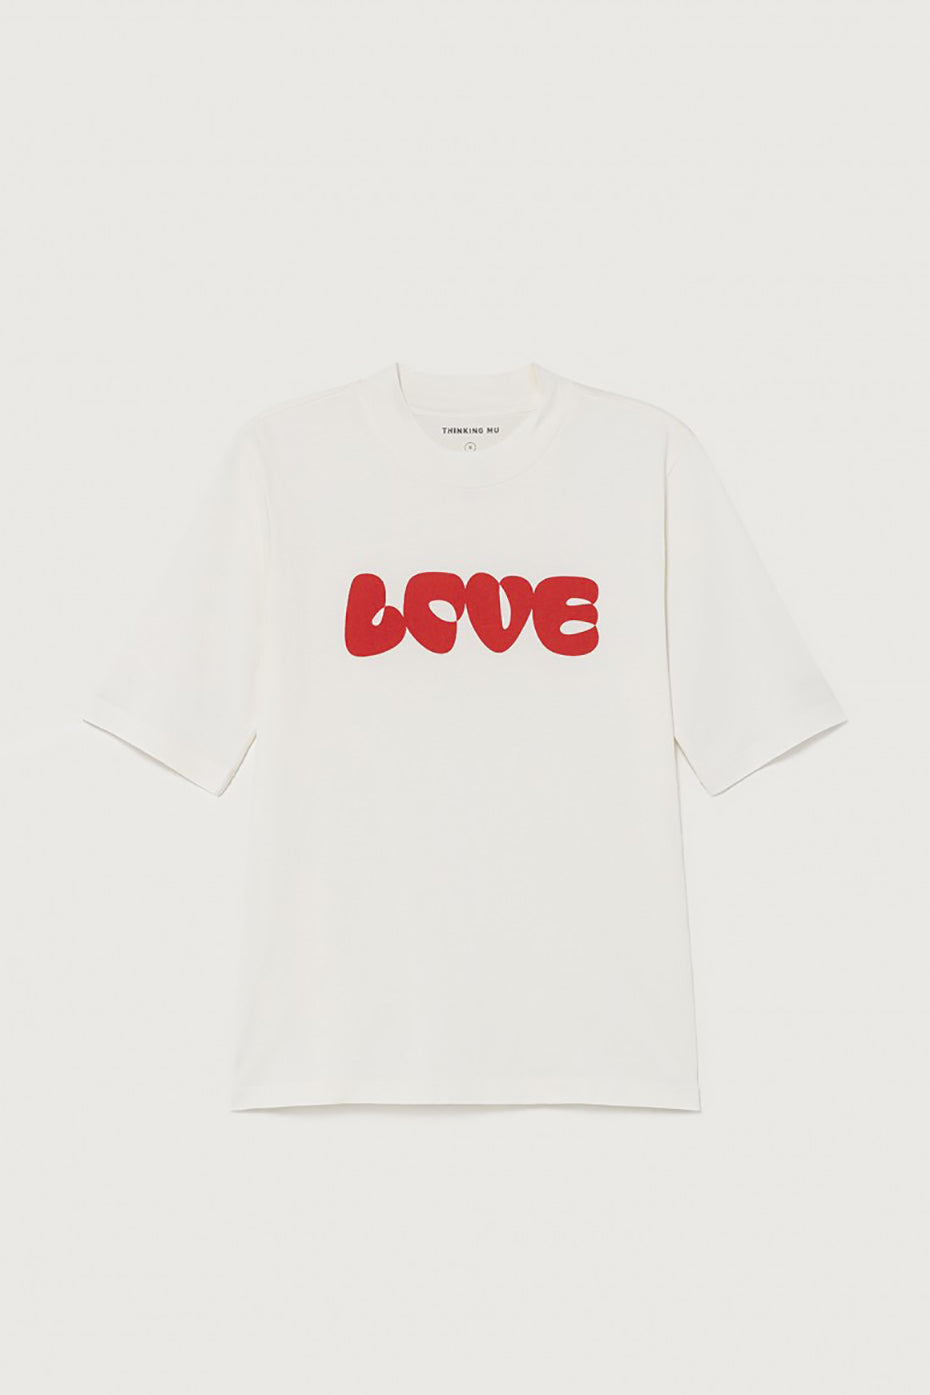 Snow White Love T-Shirt